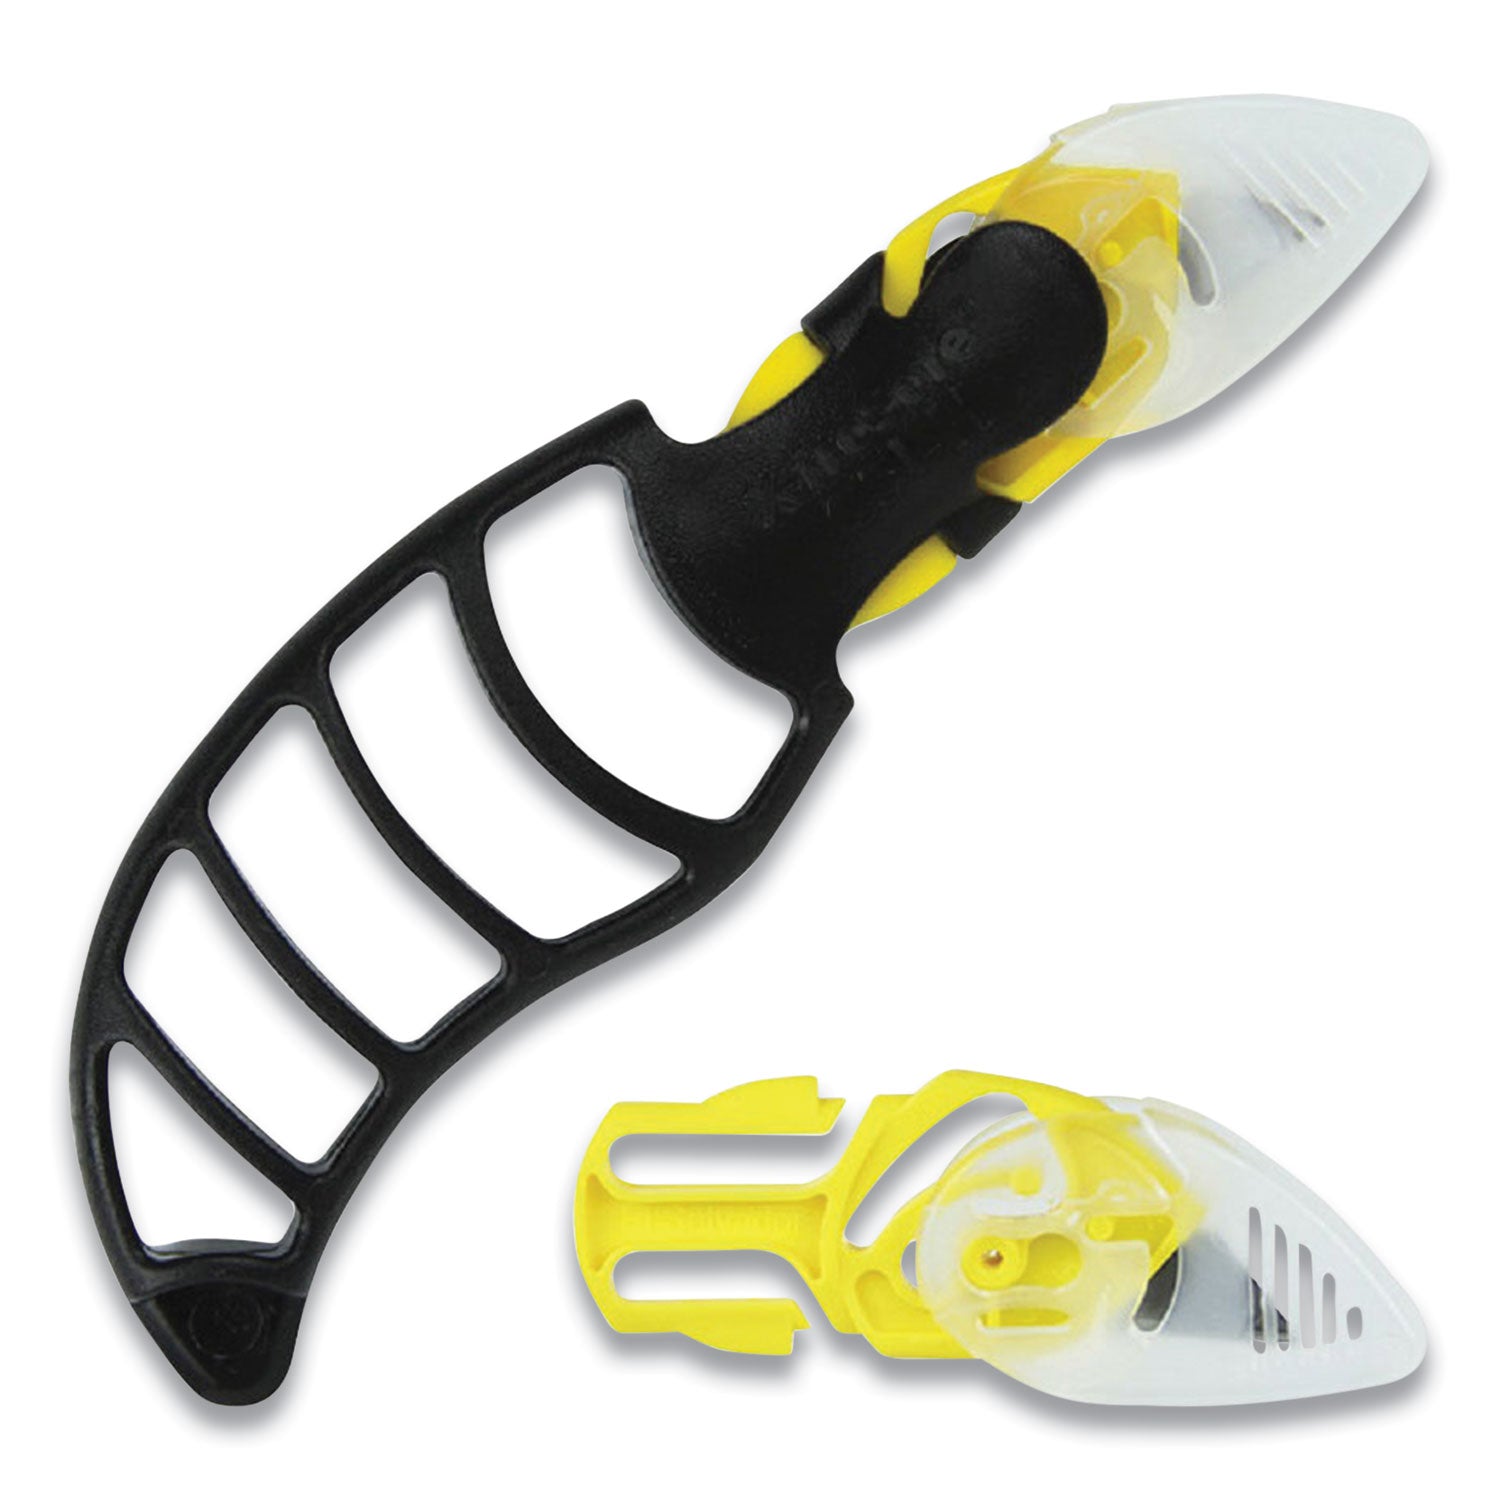 x-trasafe-cartridge-knife-kit-four-assembled-knives-8-replacement-blade-cartridges-yellow_cewcsi10 - 1